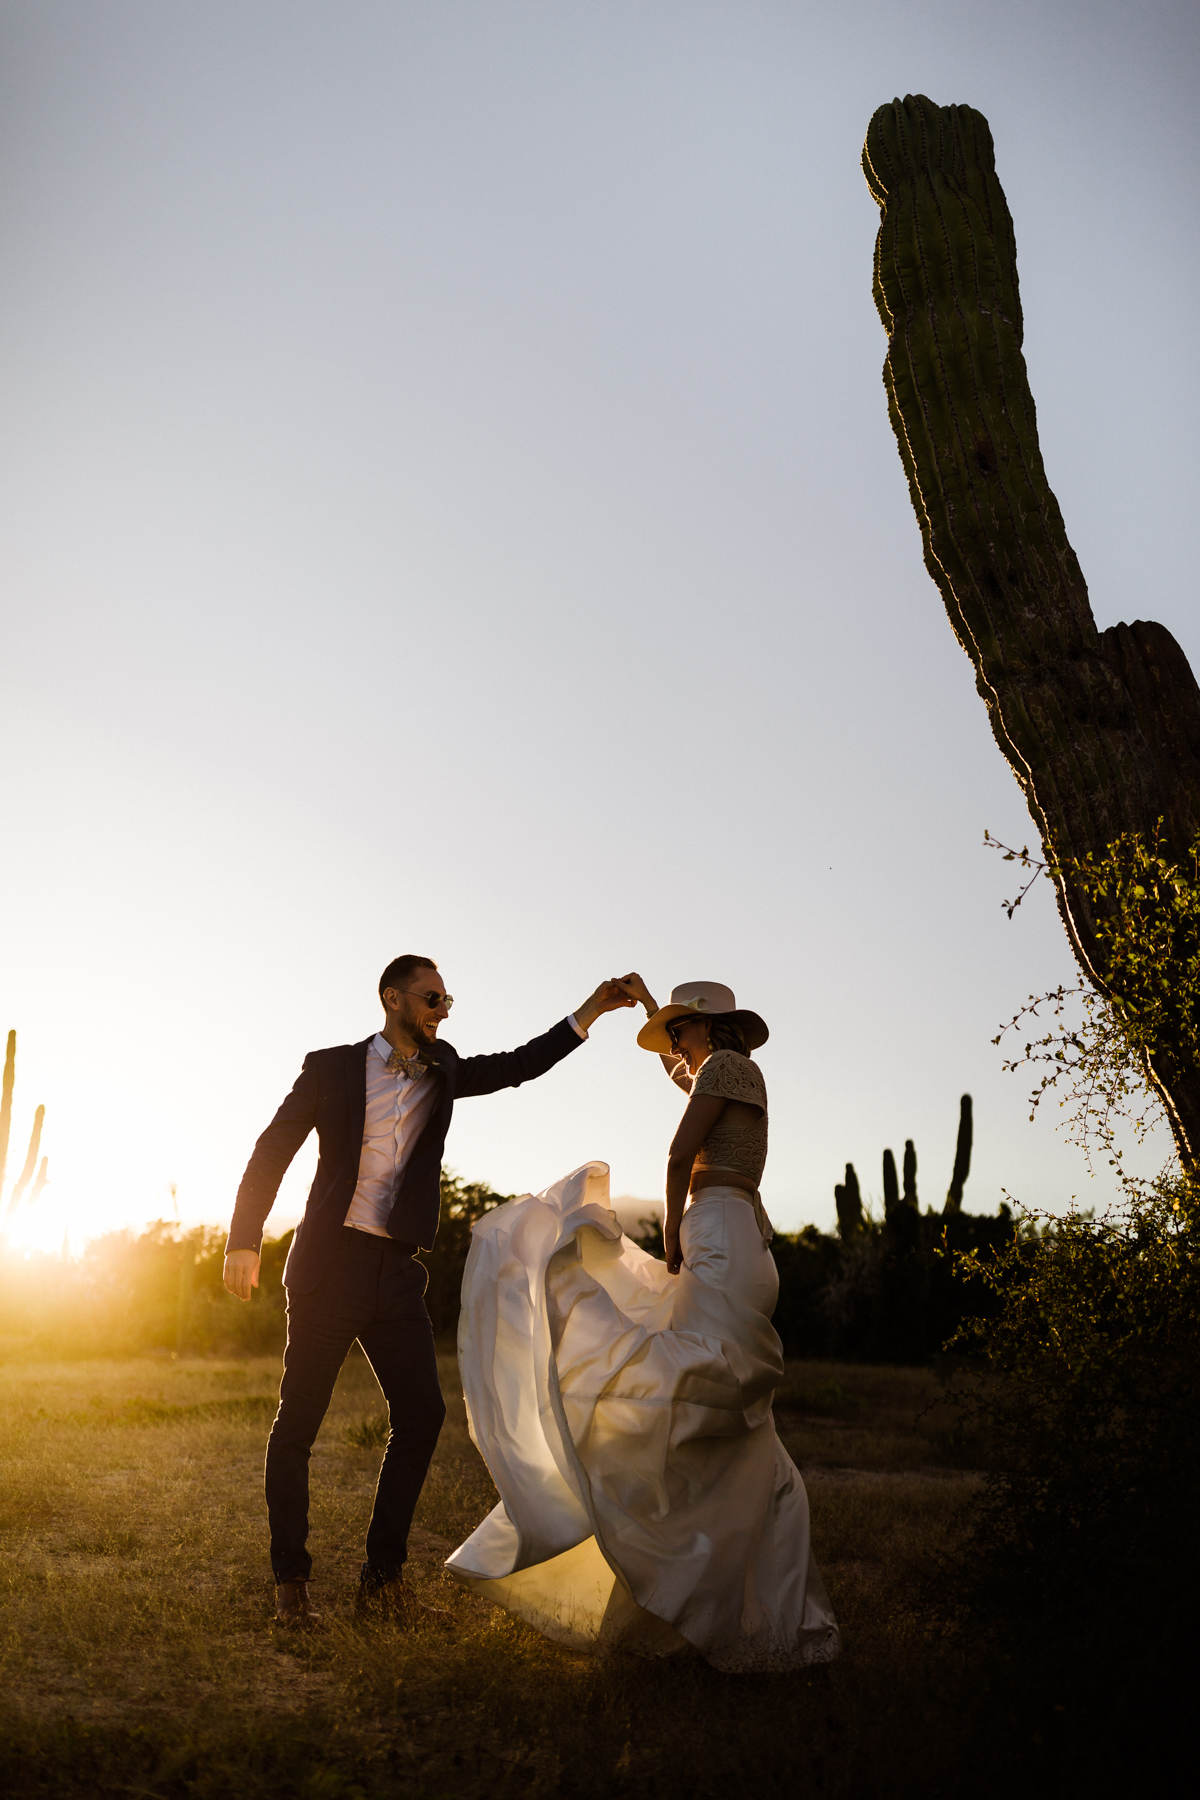 Cabo wedding photographers for a Mexico destination elopement in La Ventana, Baja California Sur